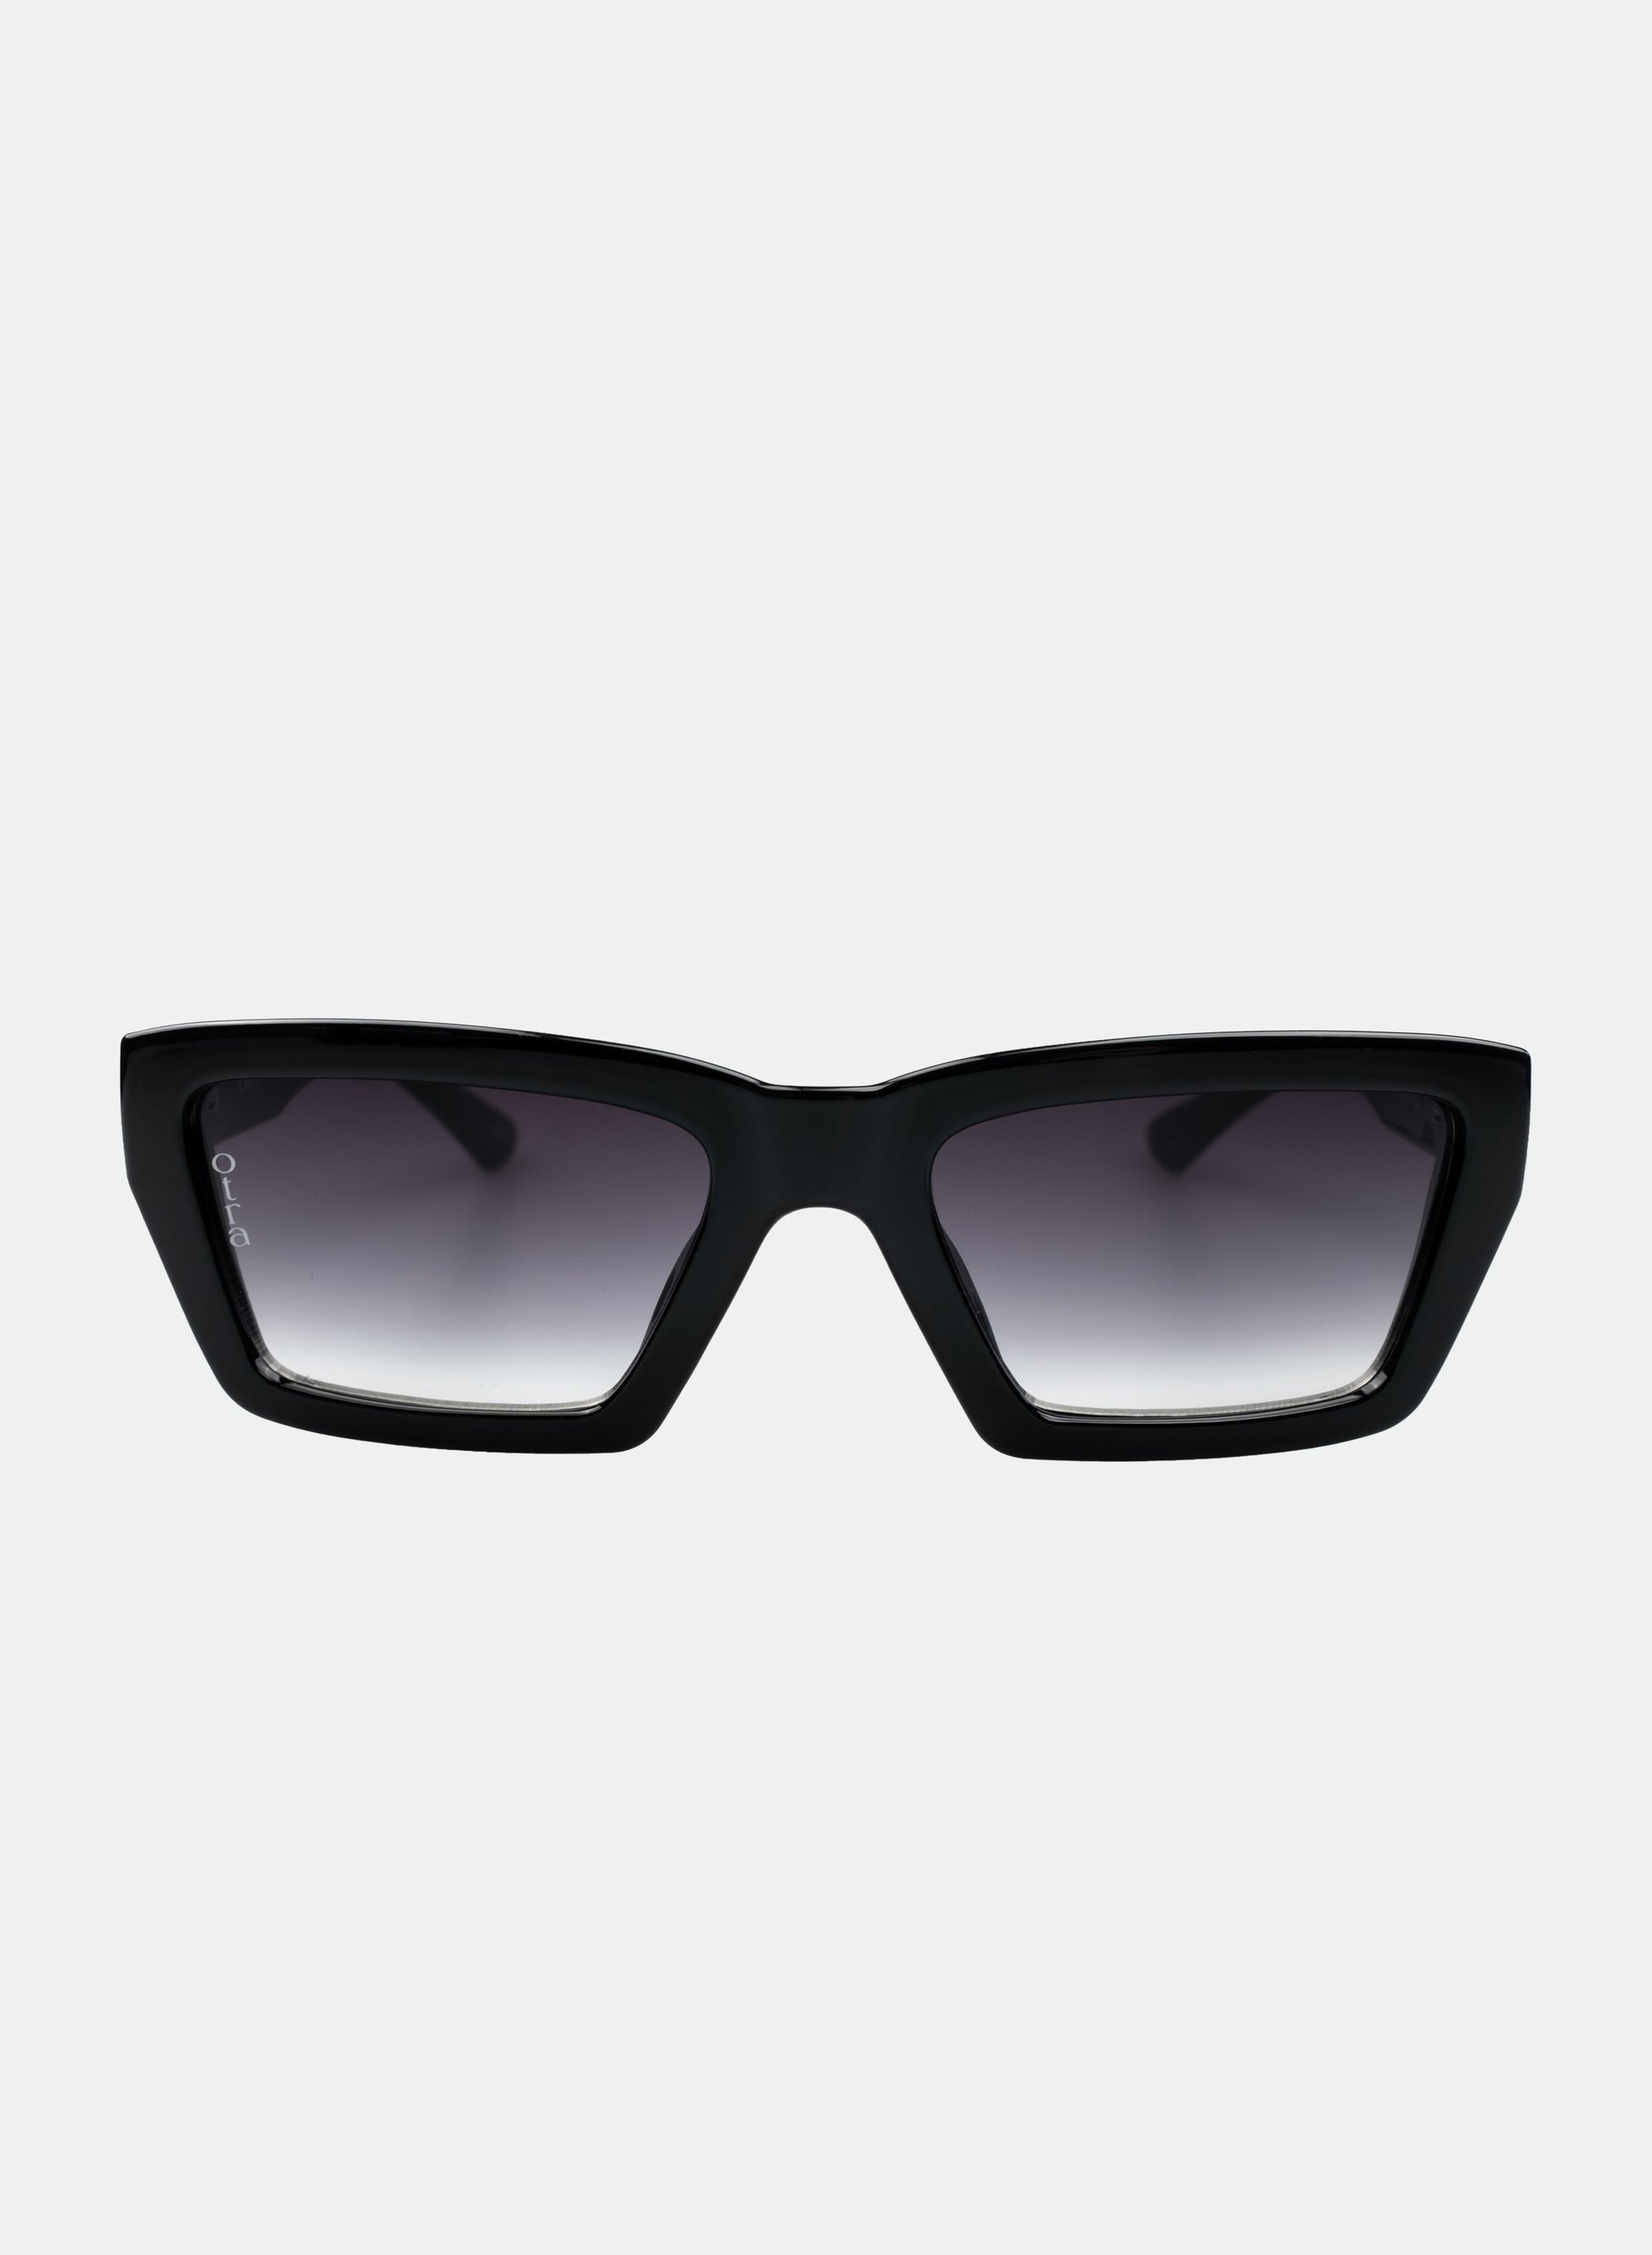 Fairfax sunglasses black 